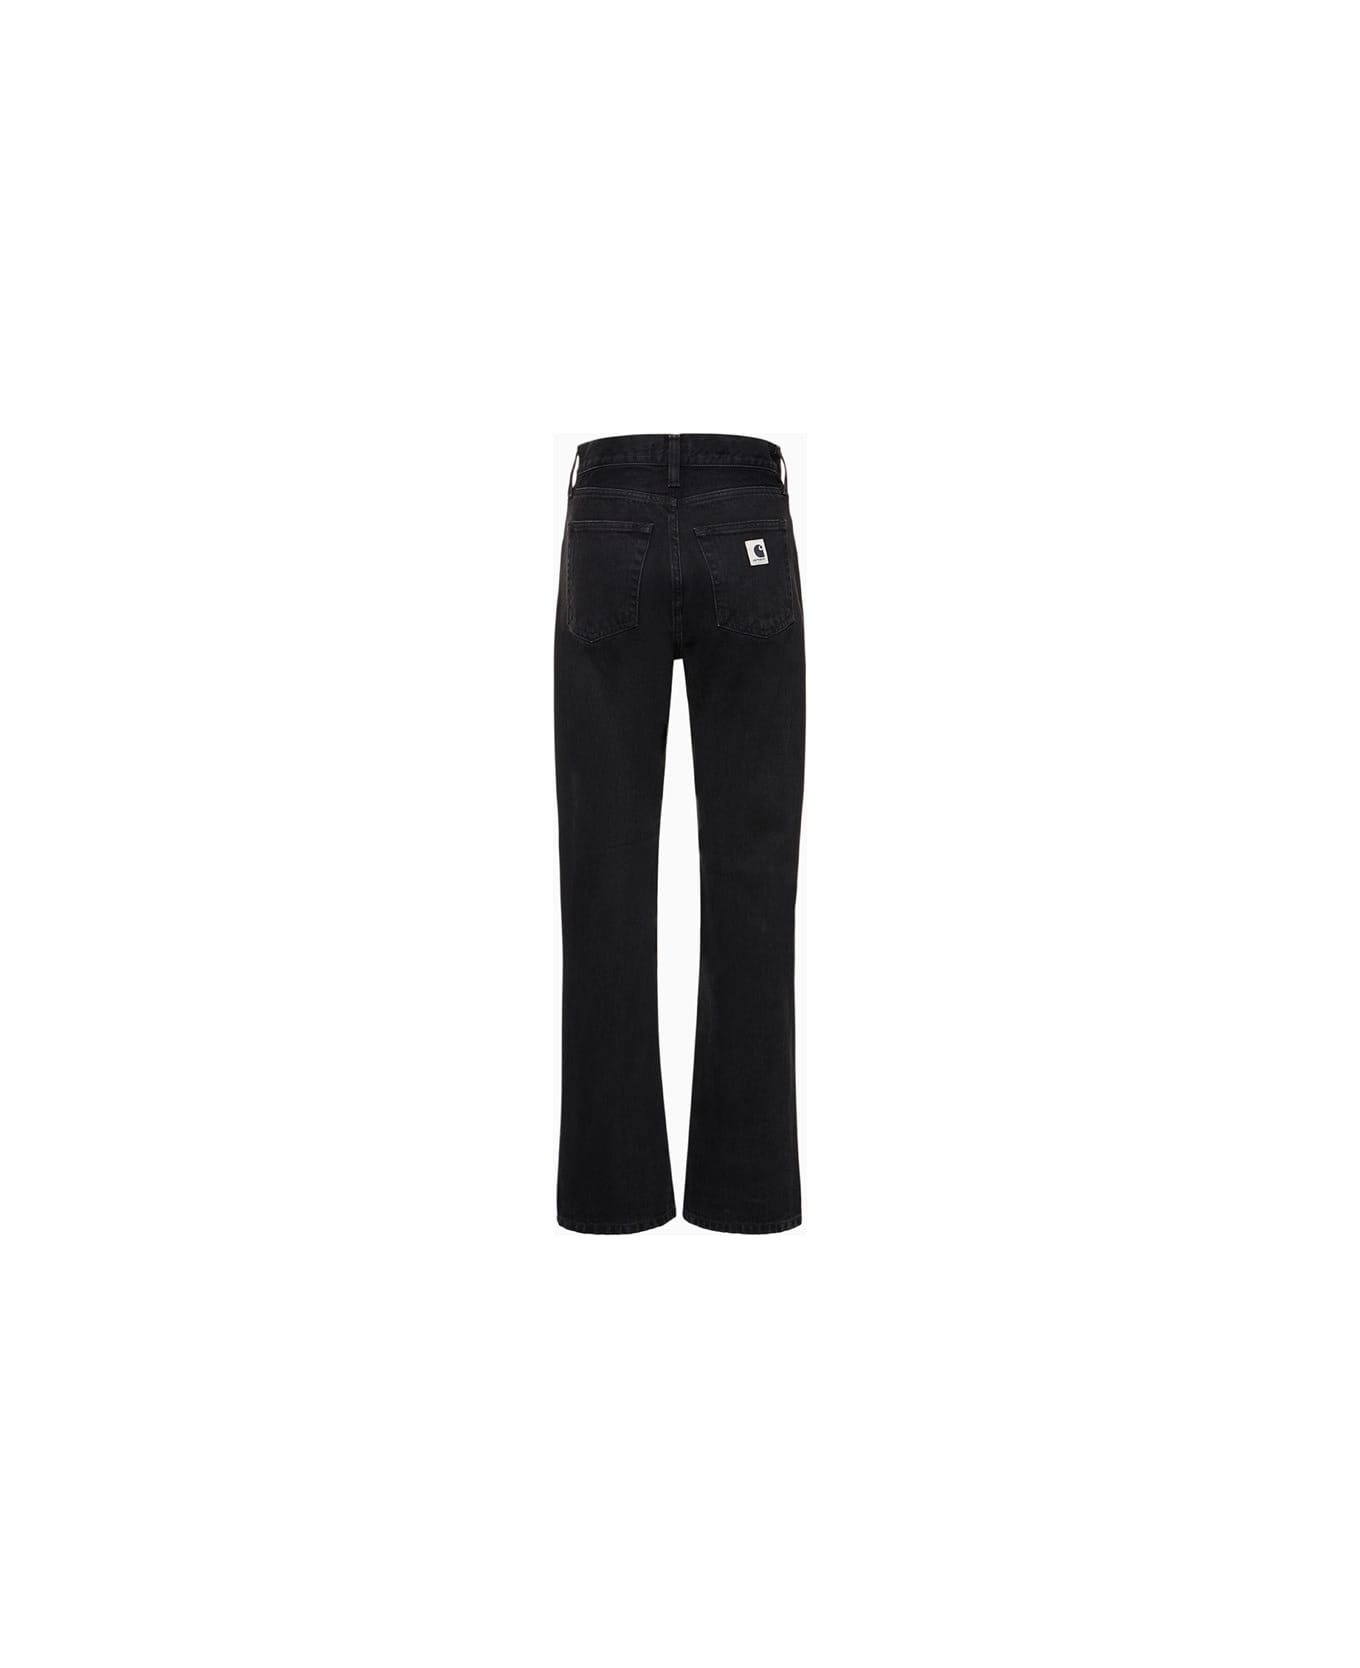 Carhartt Jeans - Black